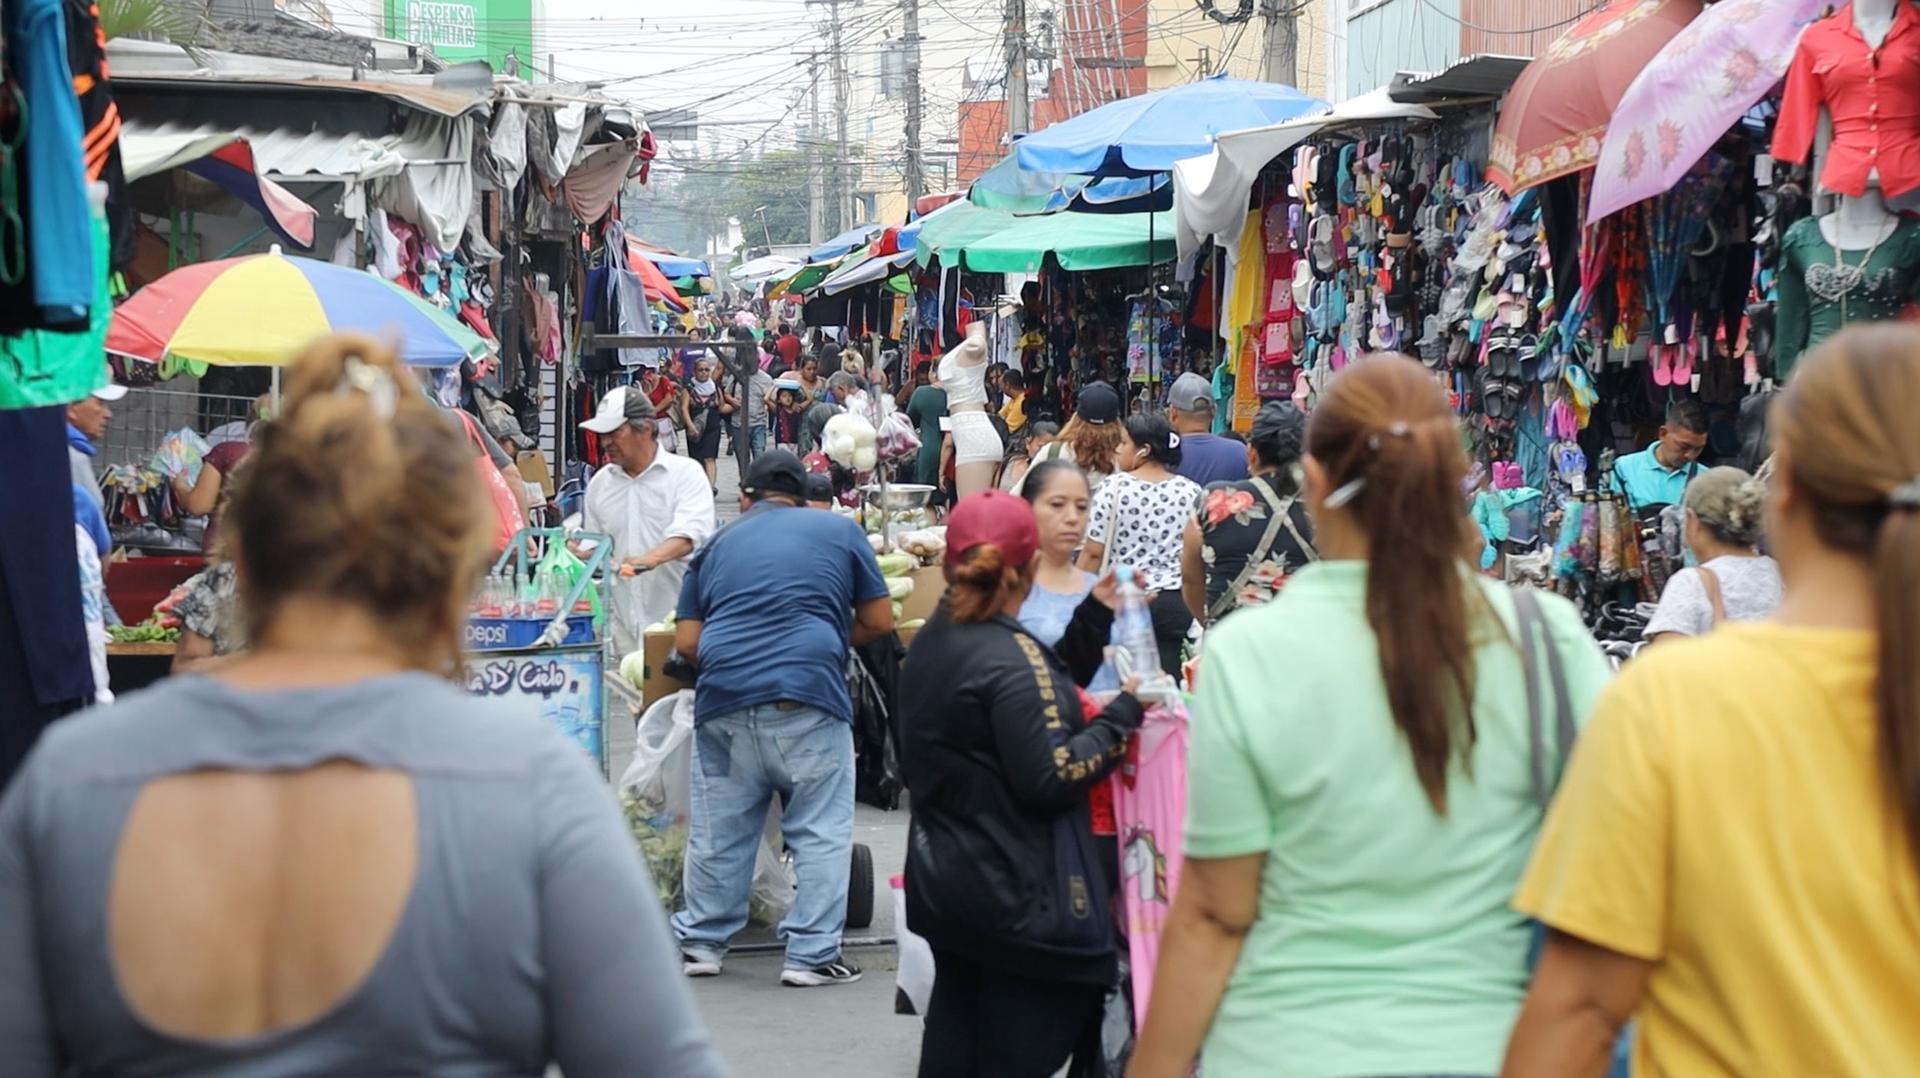 A scene from downtown San Salvador, El Salvador.